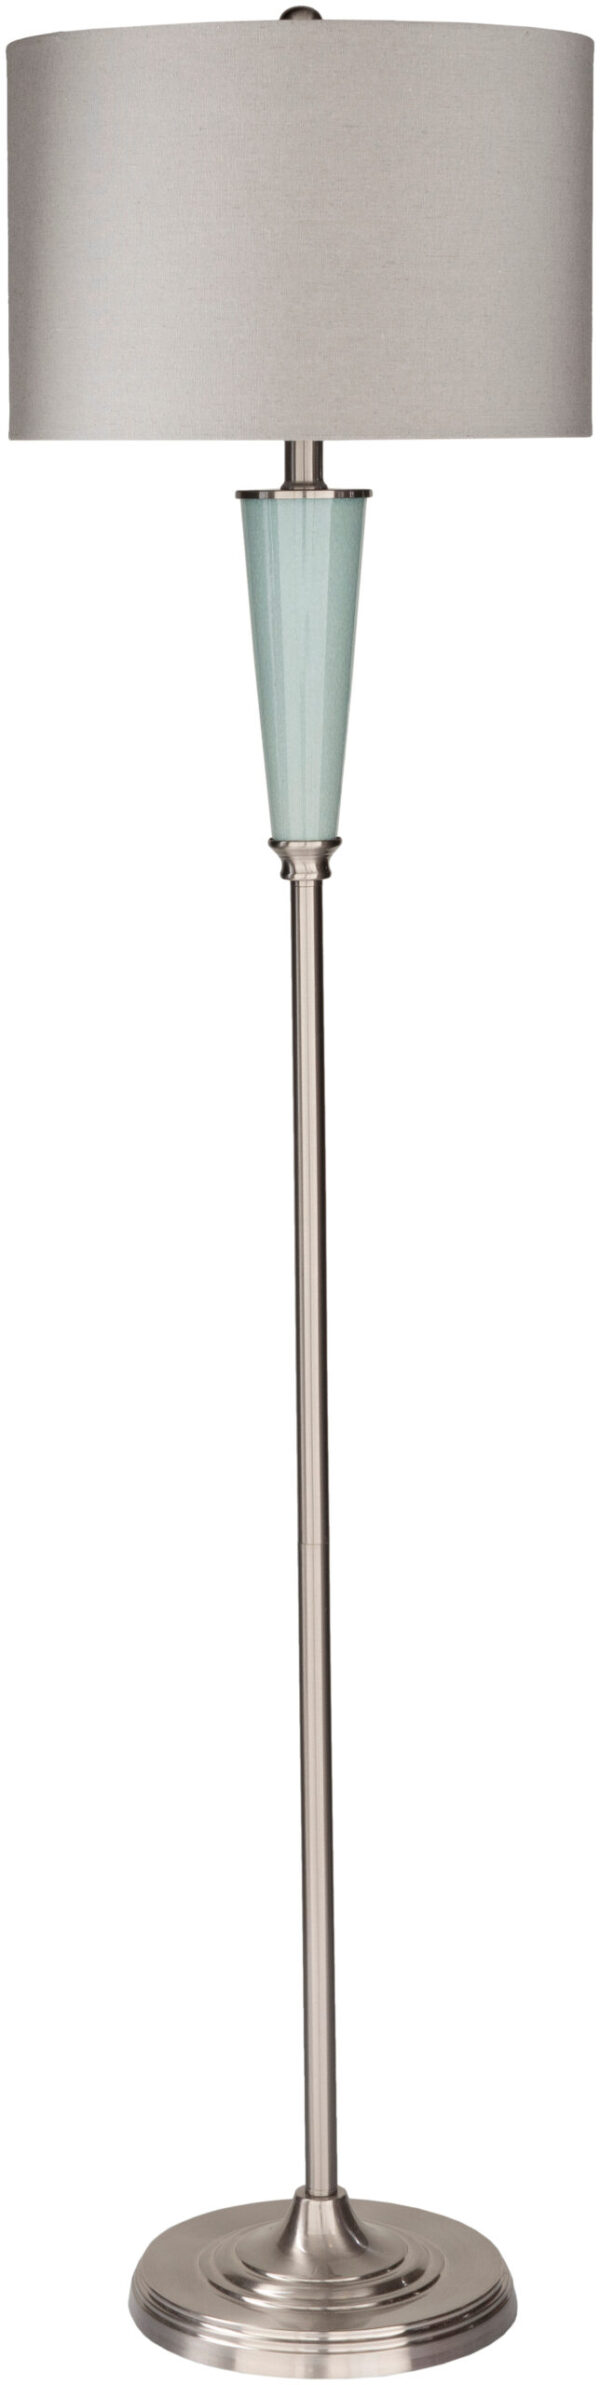 Surya - Goswell Floor Lamp GSL-003